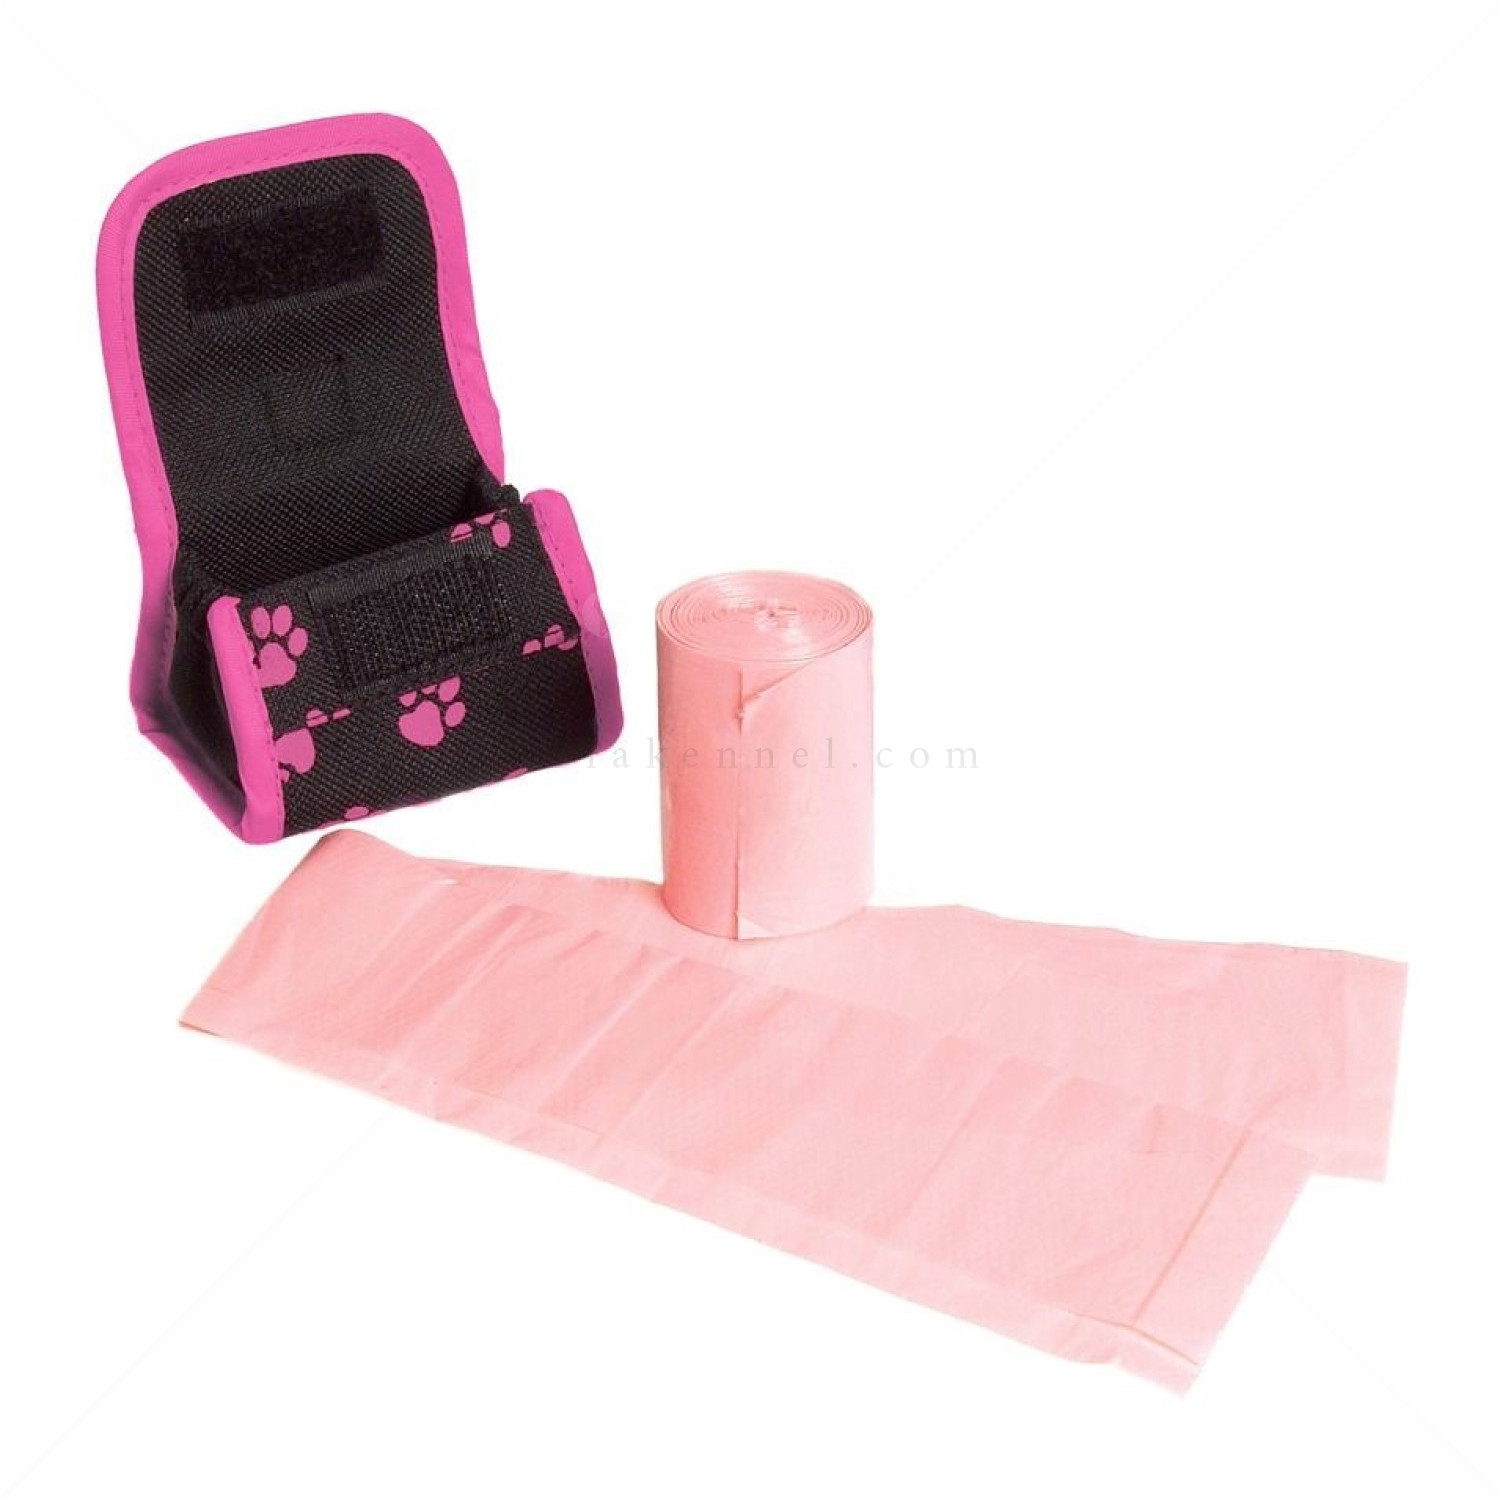 Текстилна чантичка за торбички KARLIE, розова